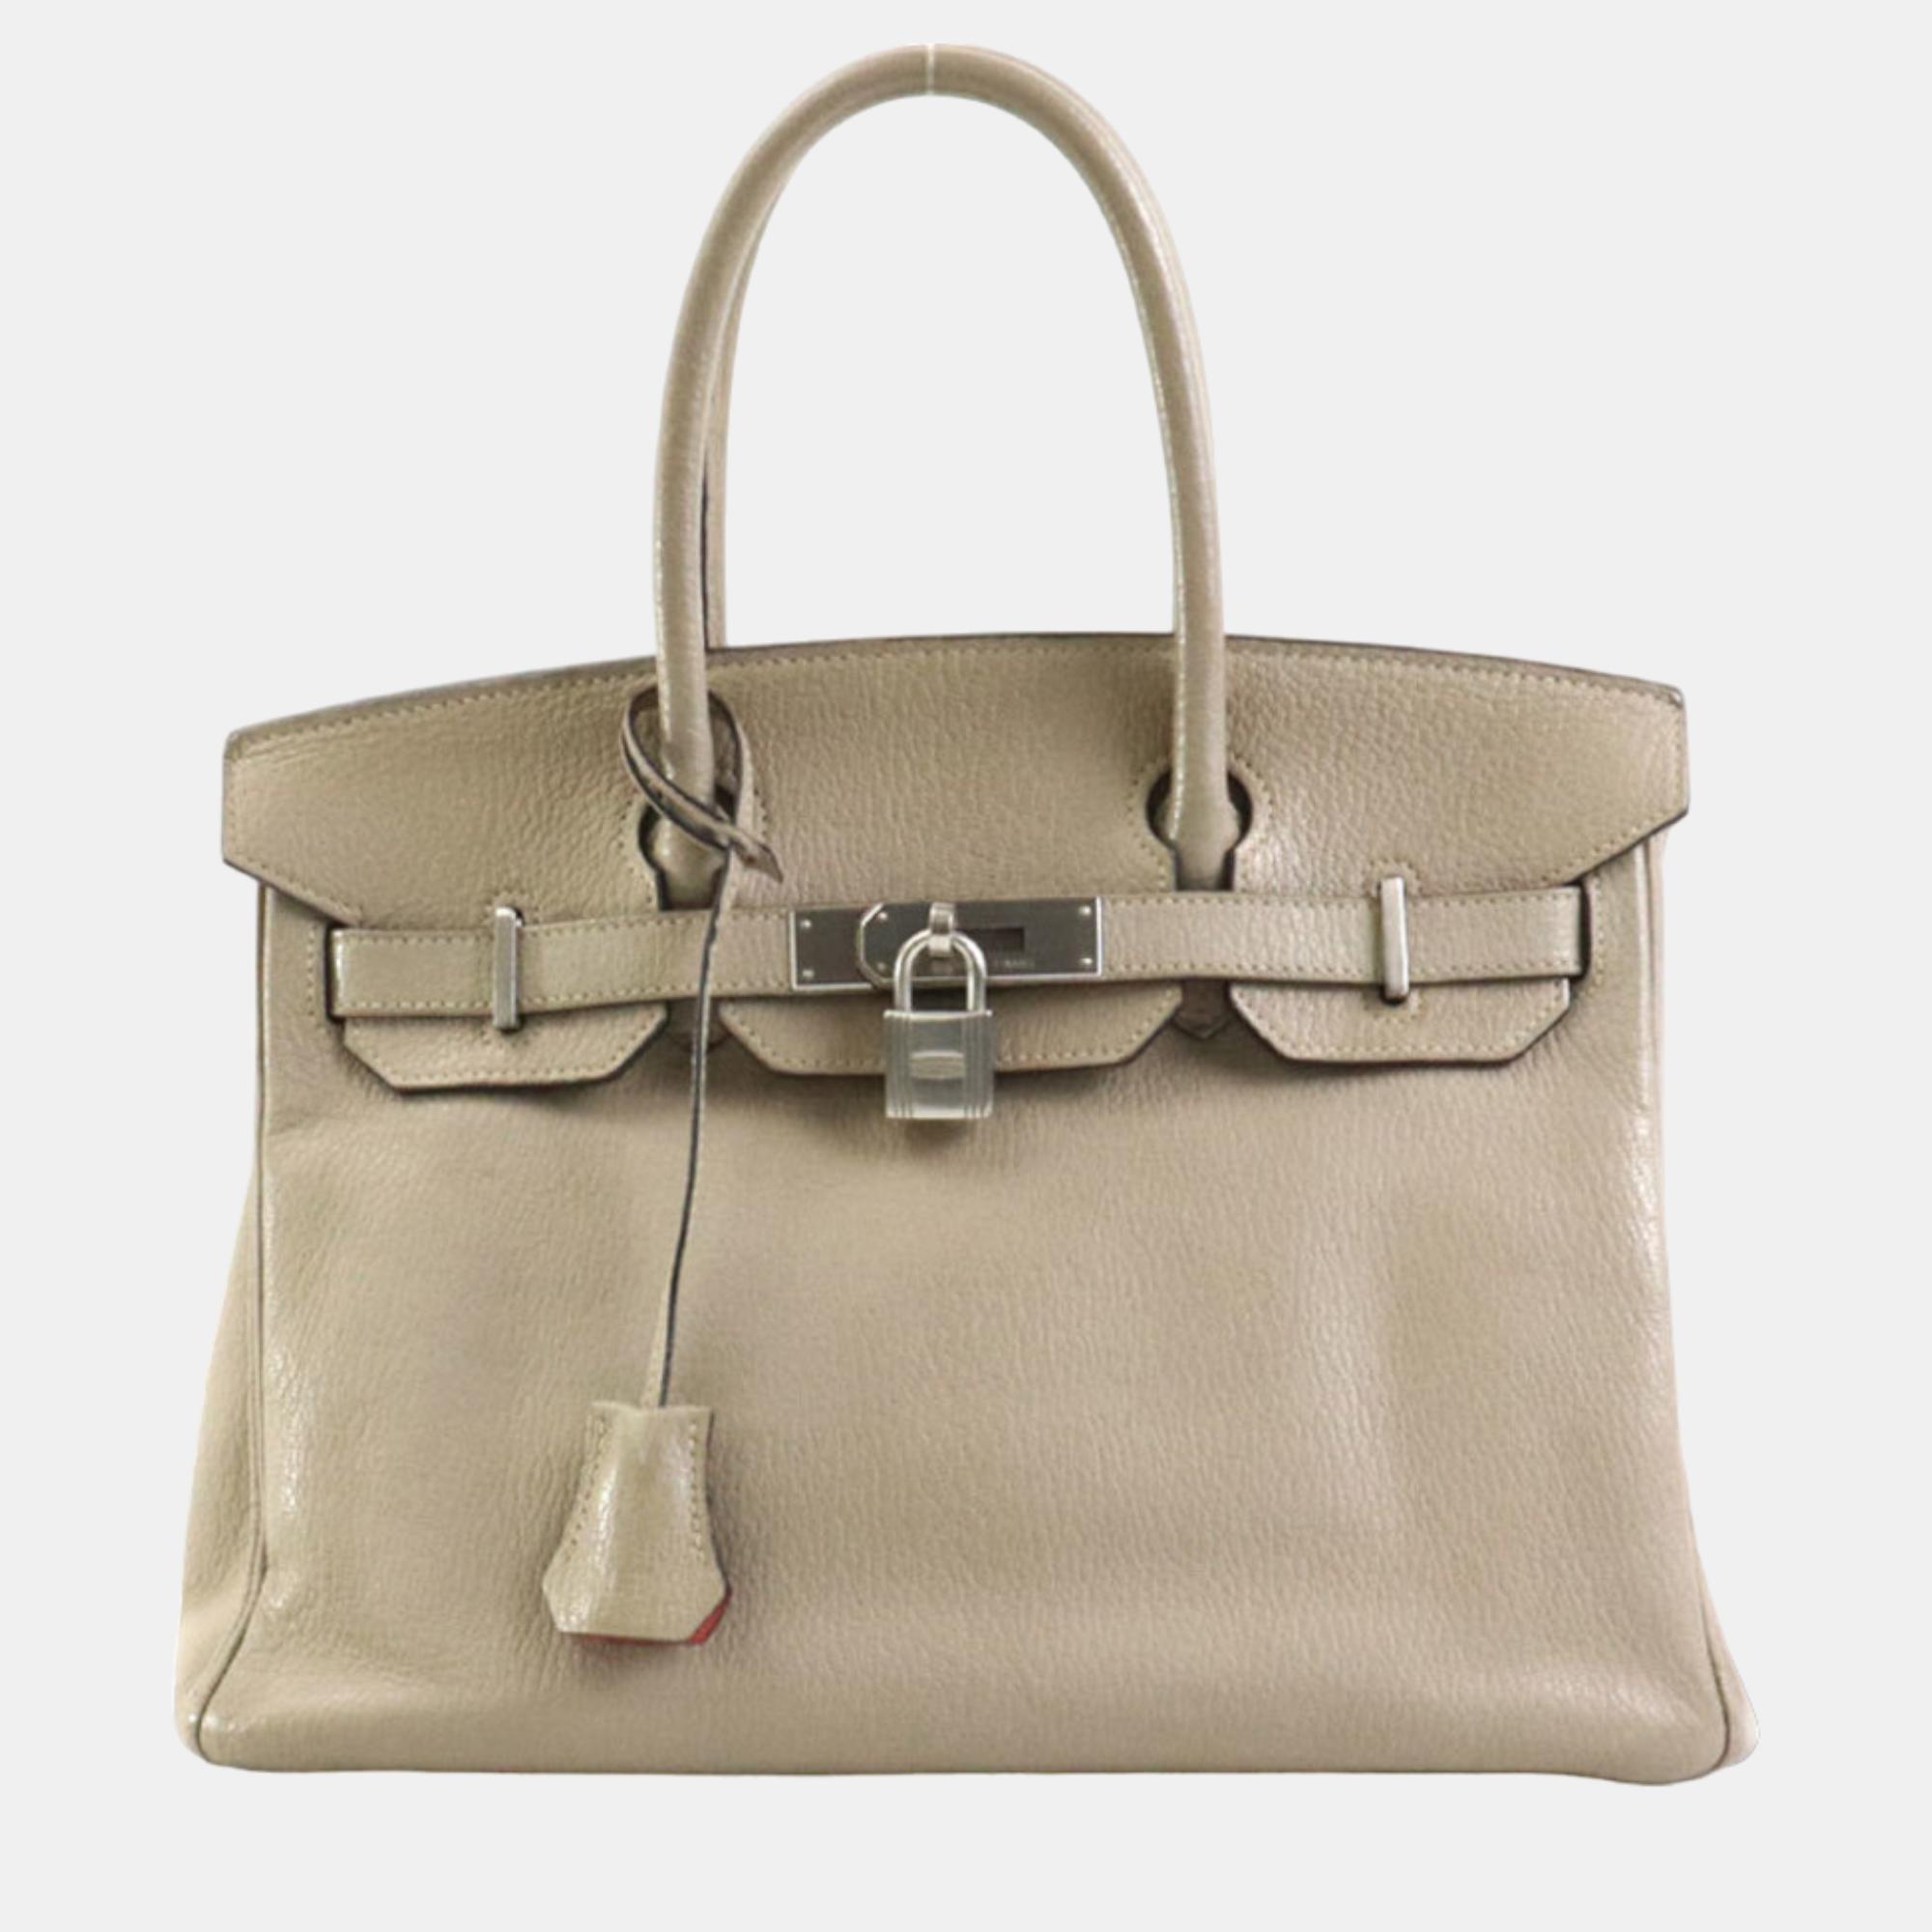 Hermes handbag personal order birkin 30 chevre misor estimated tourtiere gray x flamingo silver ladies